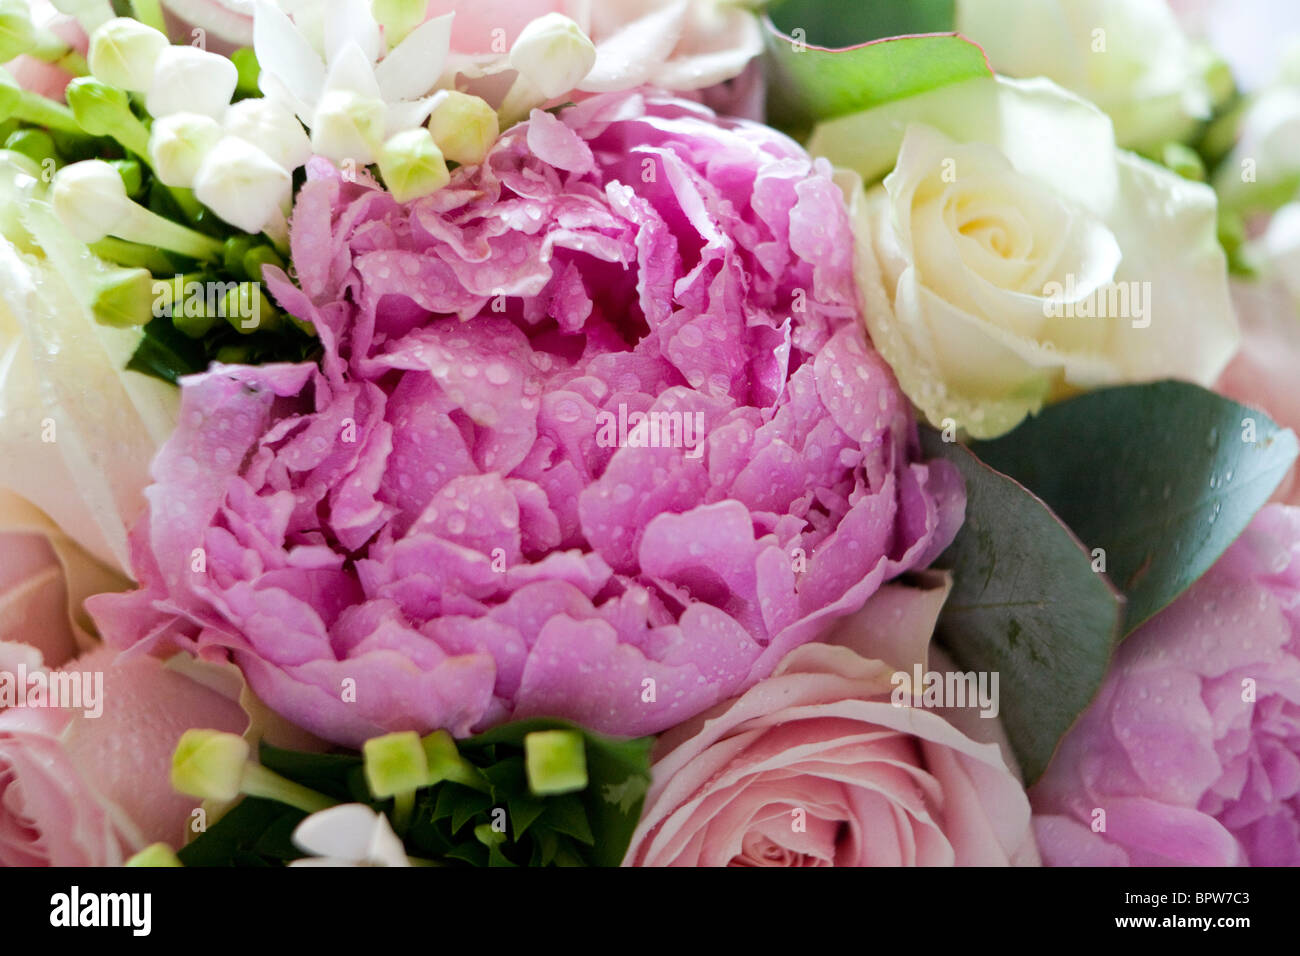 Wedding Bouquet with pink peony Stock Photo